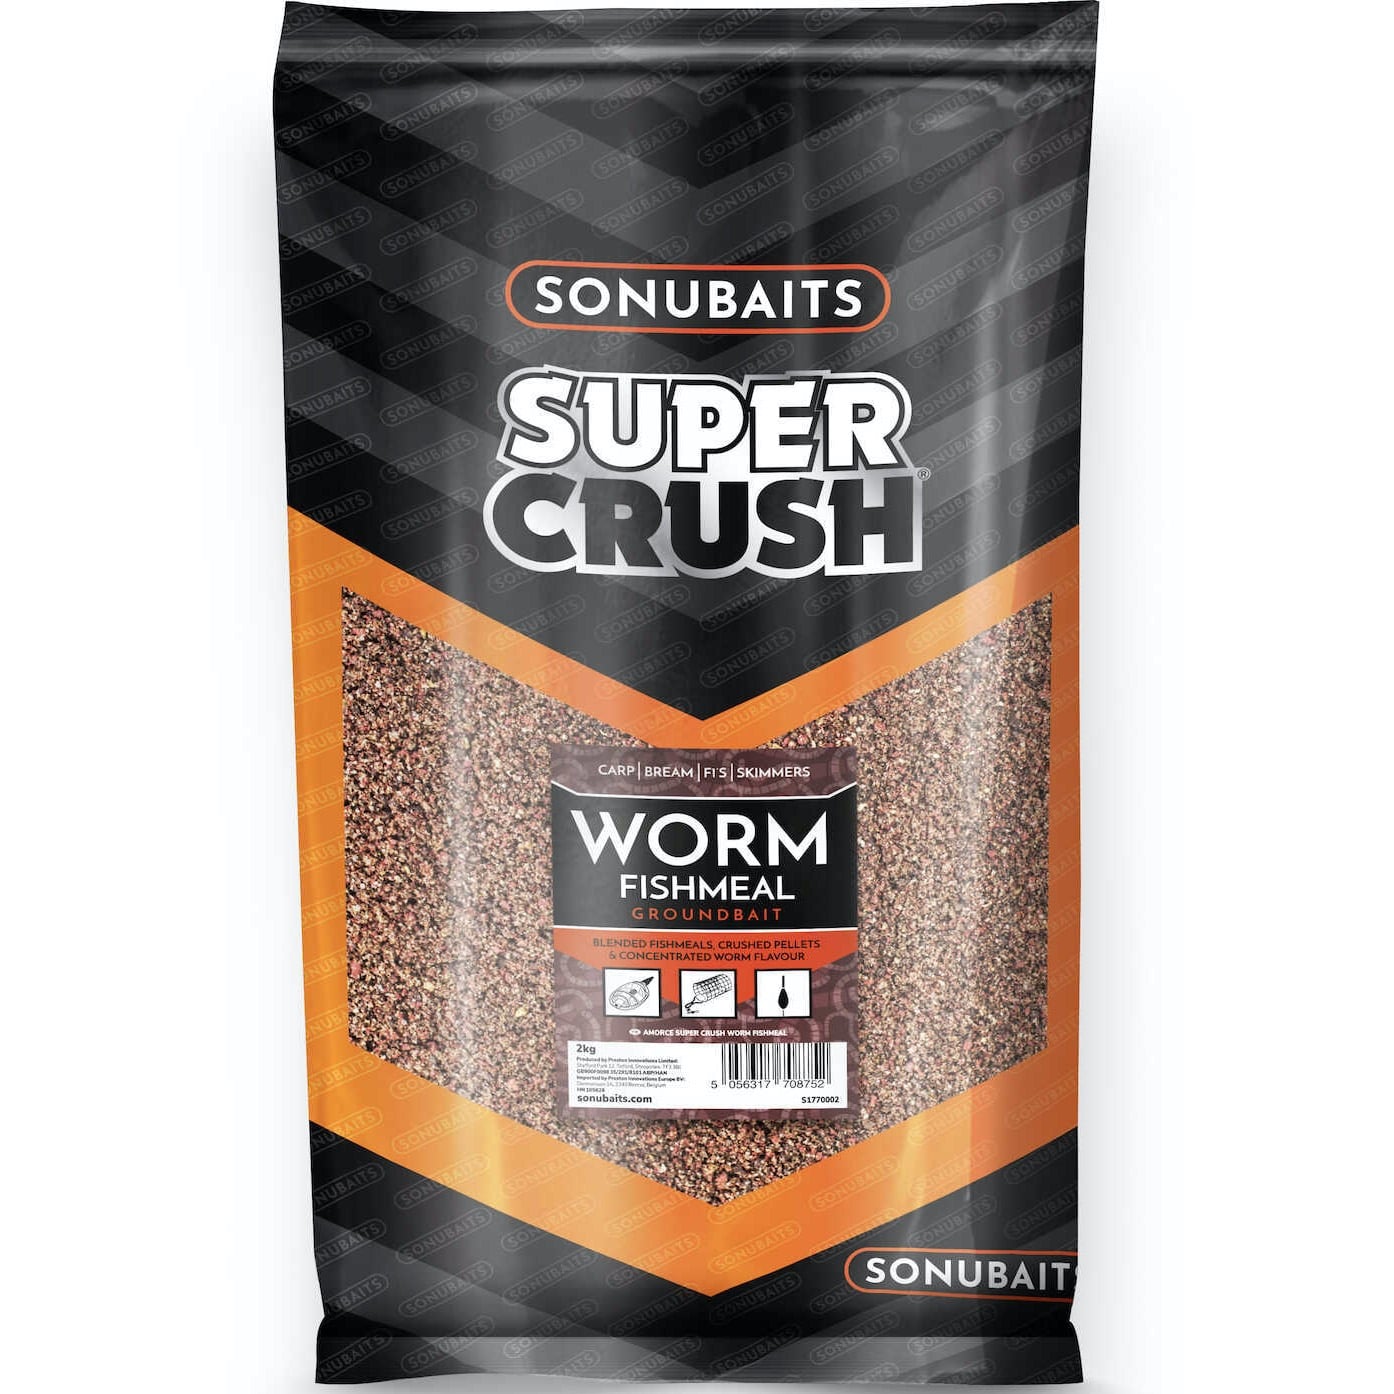 Sonubaits supercrush worm fishmeal